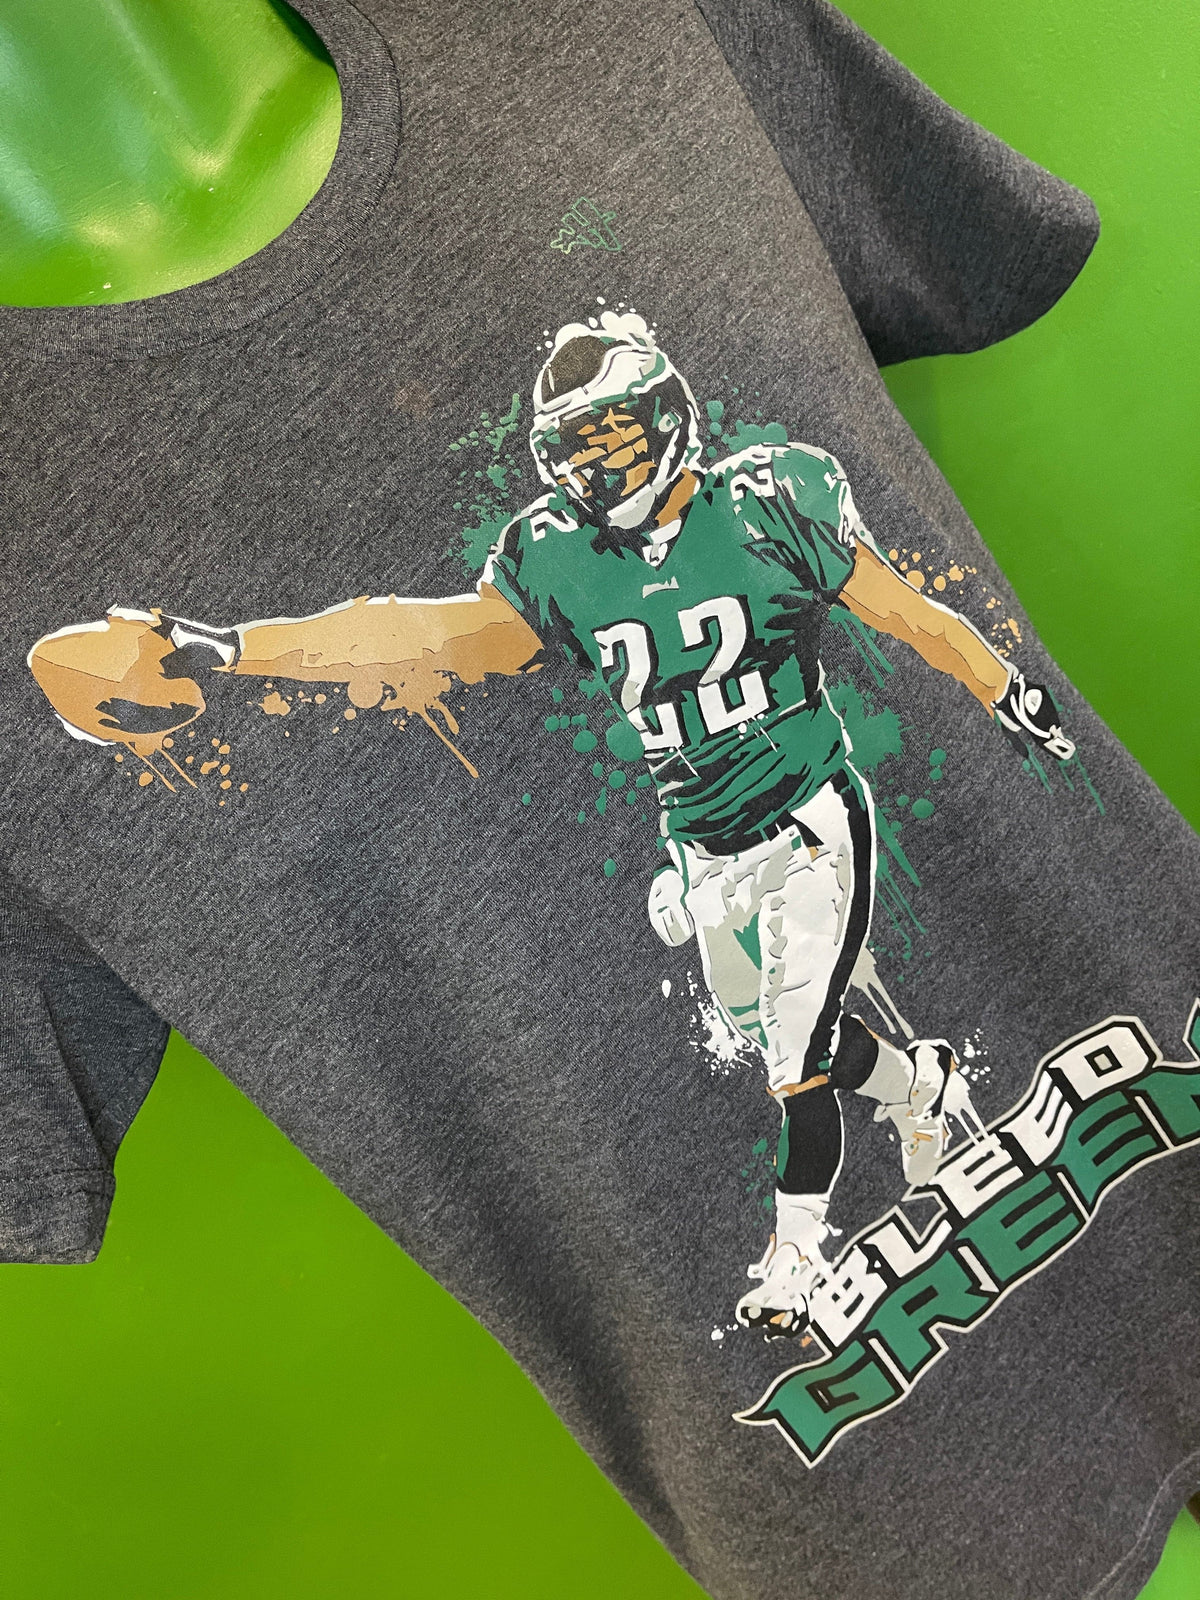 NFL Philadelphia Eagles Bleed Green Heathered Charcoal Grey T-Shirt Men's Small